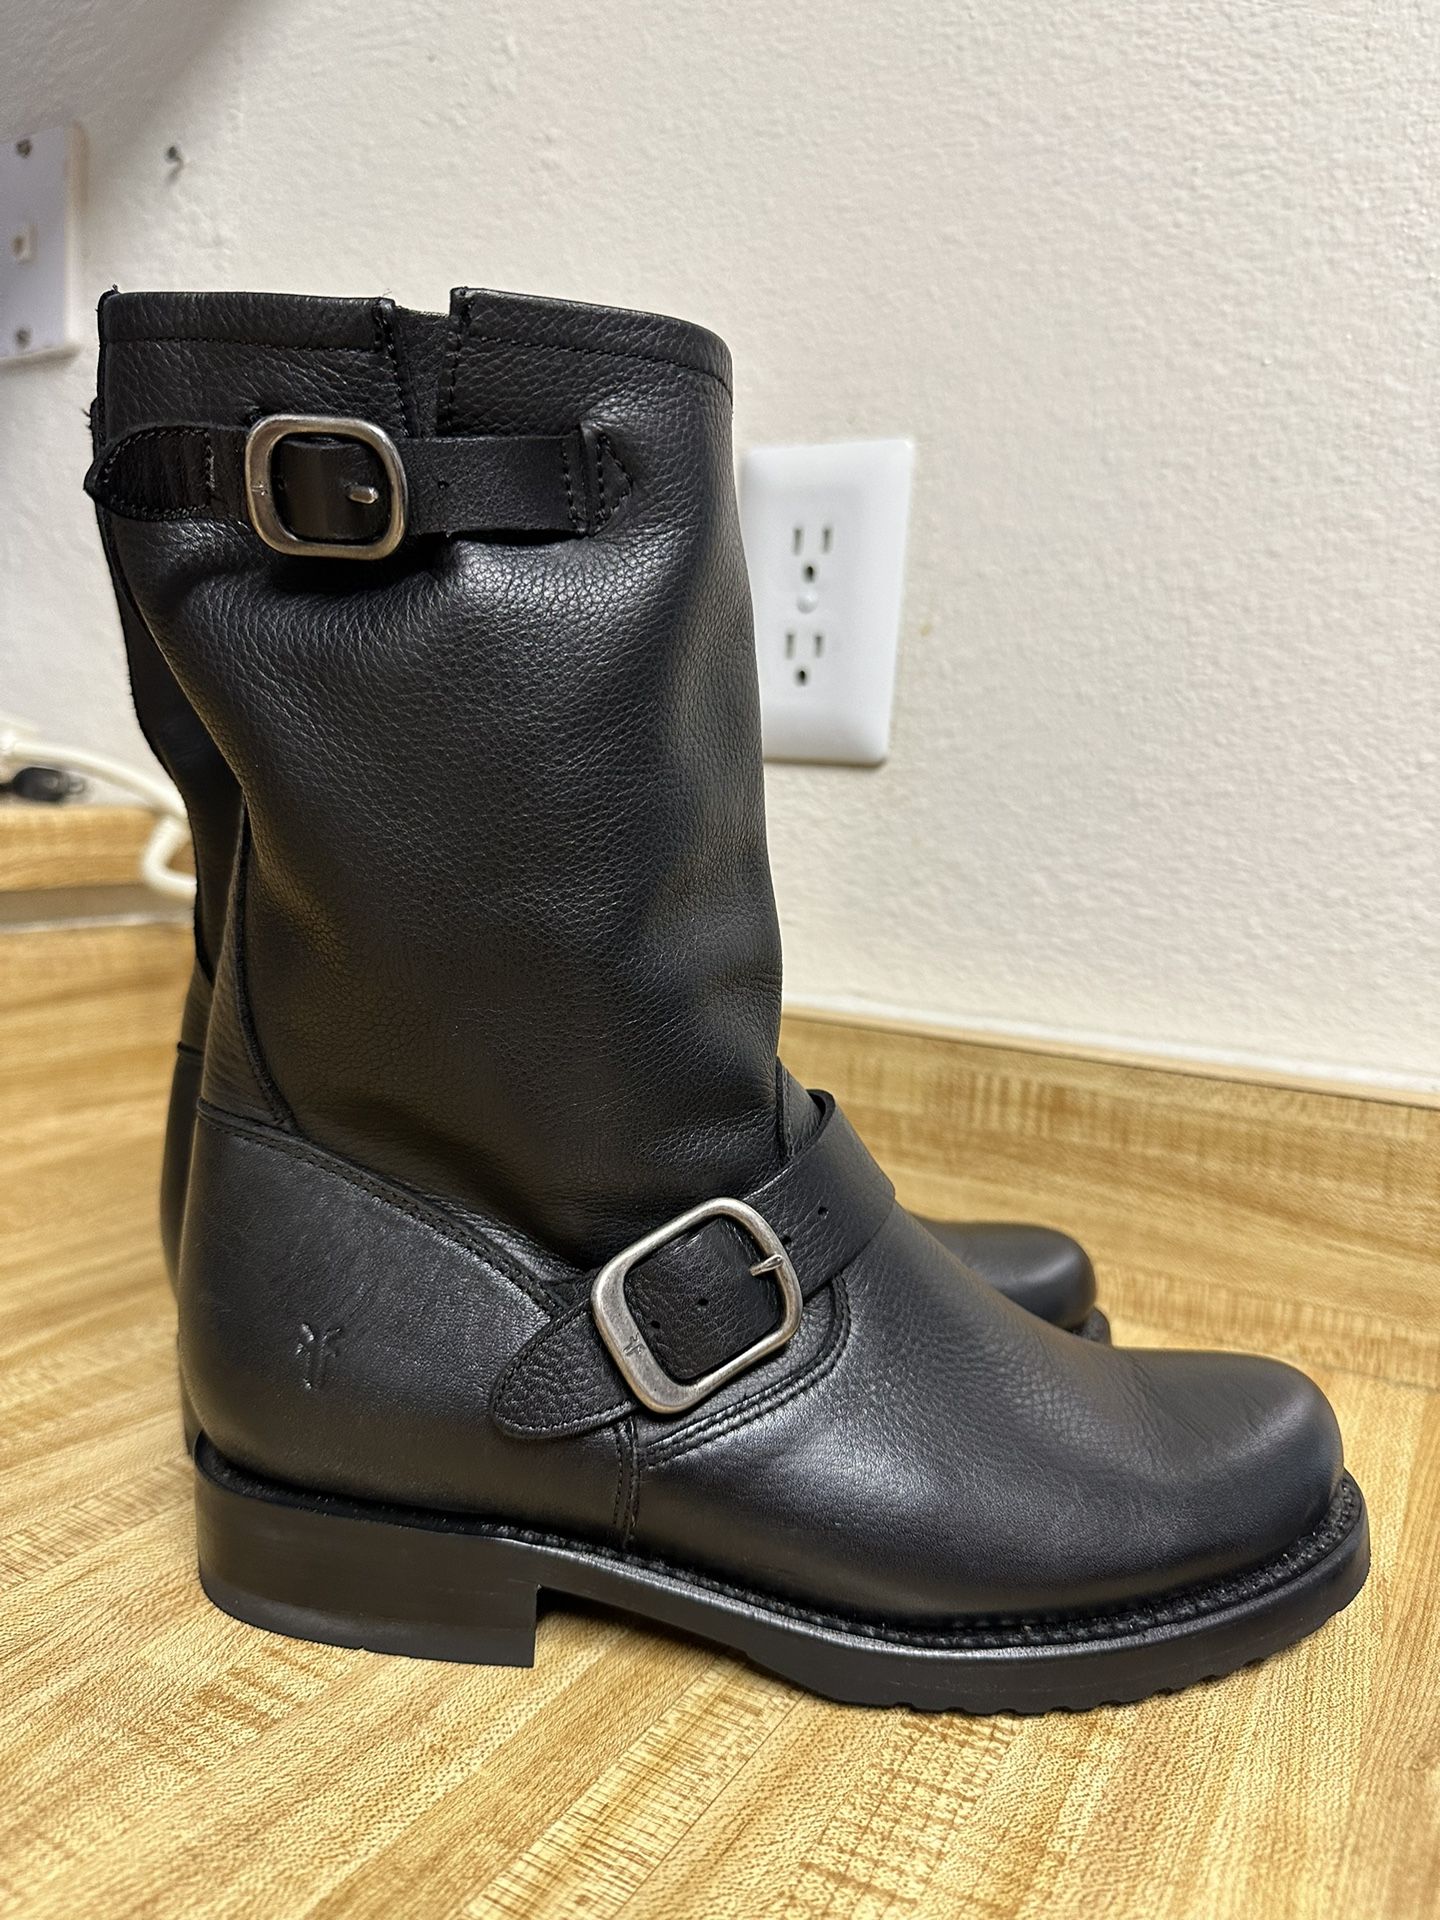 Frye Veronica Short Boot - Black - Size 7.5